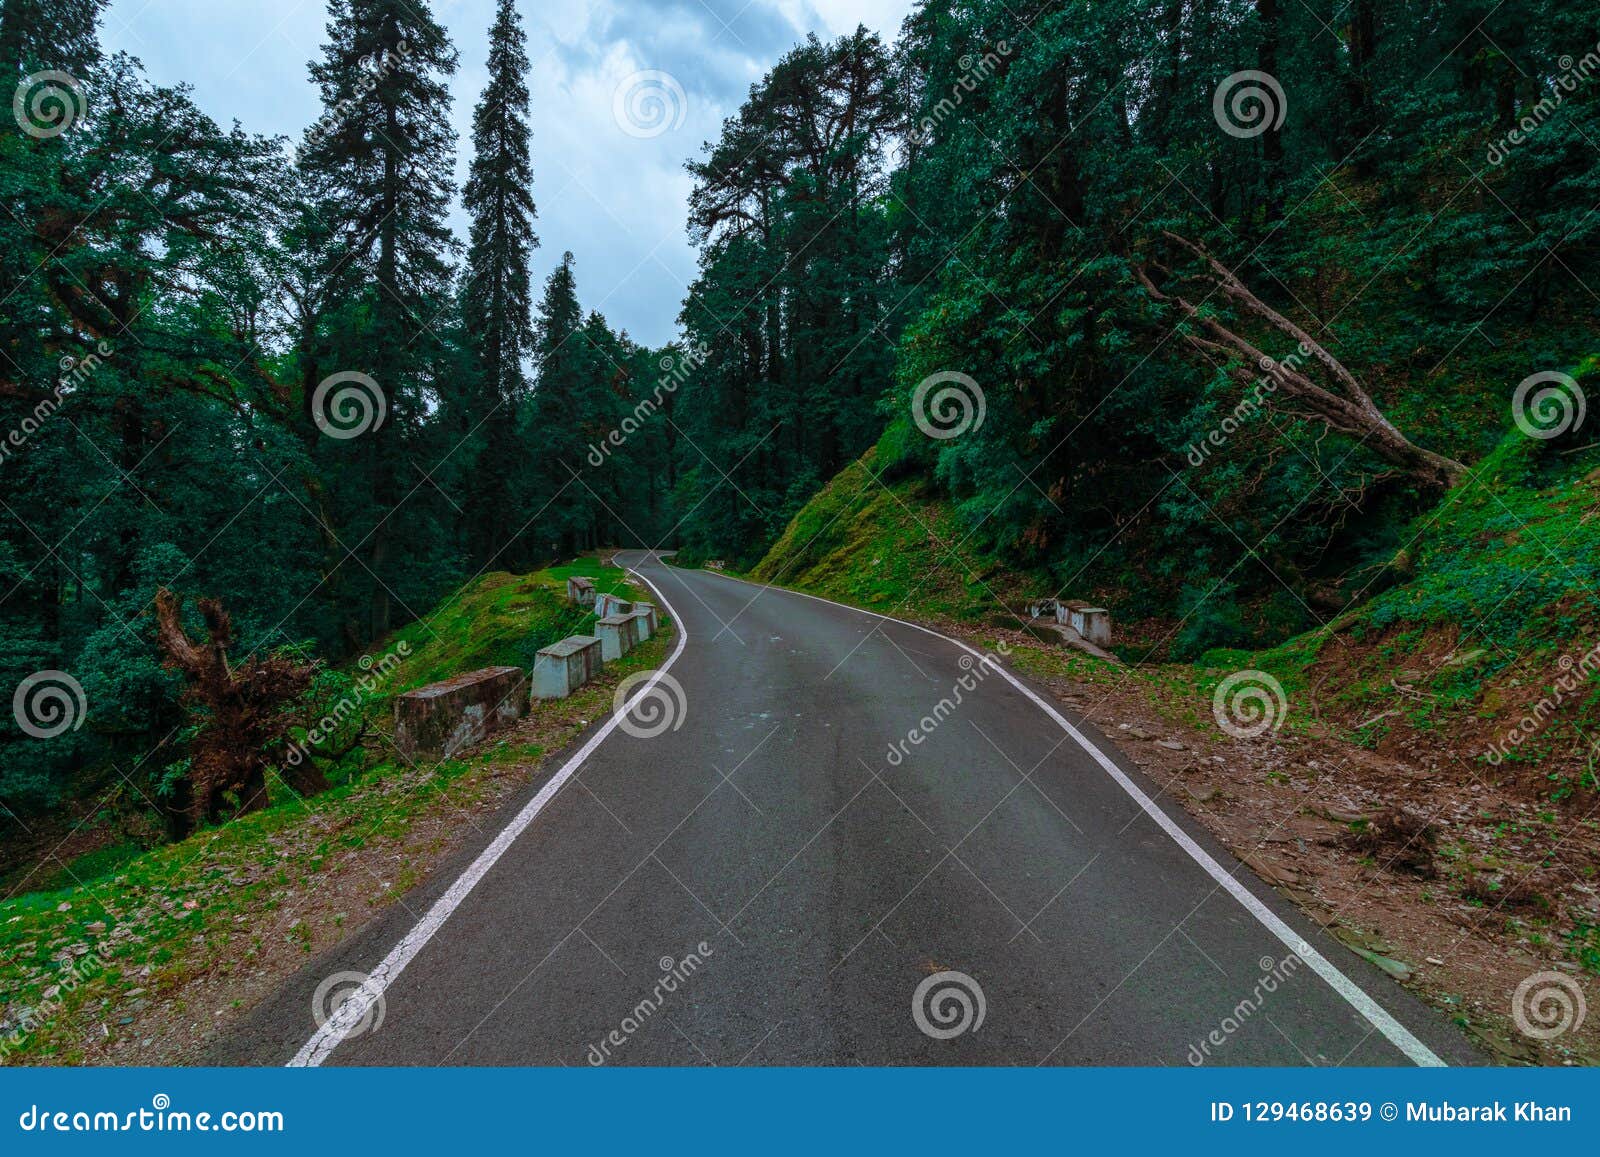 empty road to chopta, uttrakhand